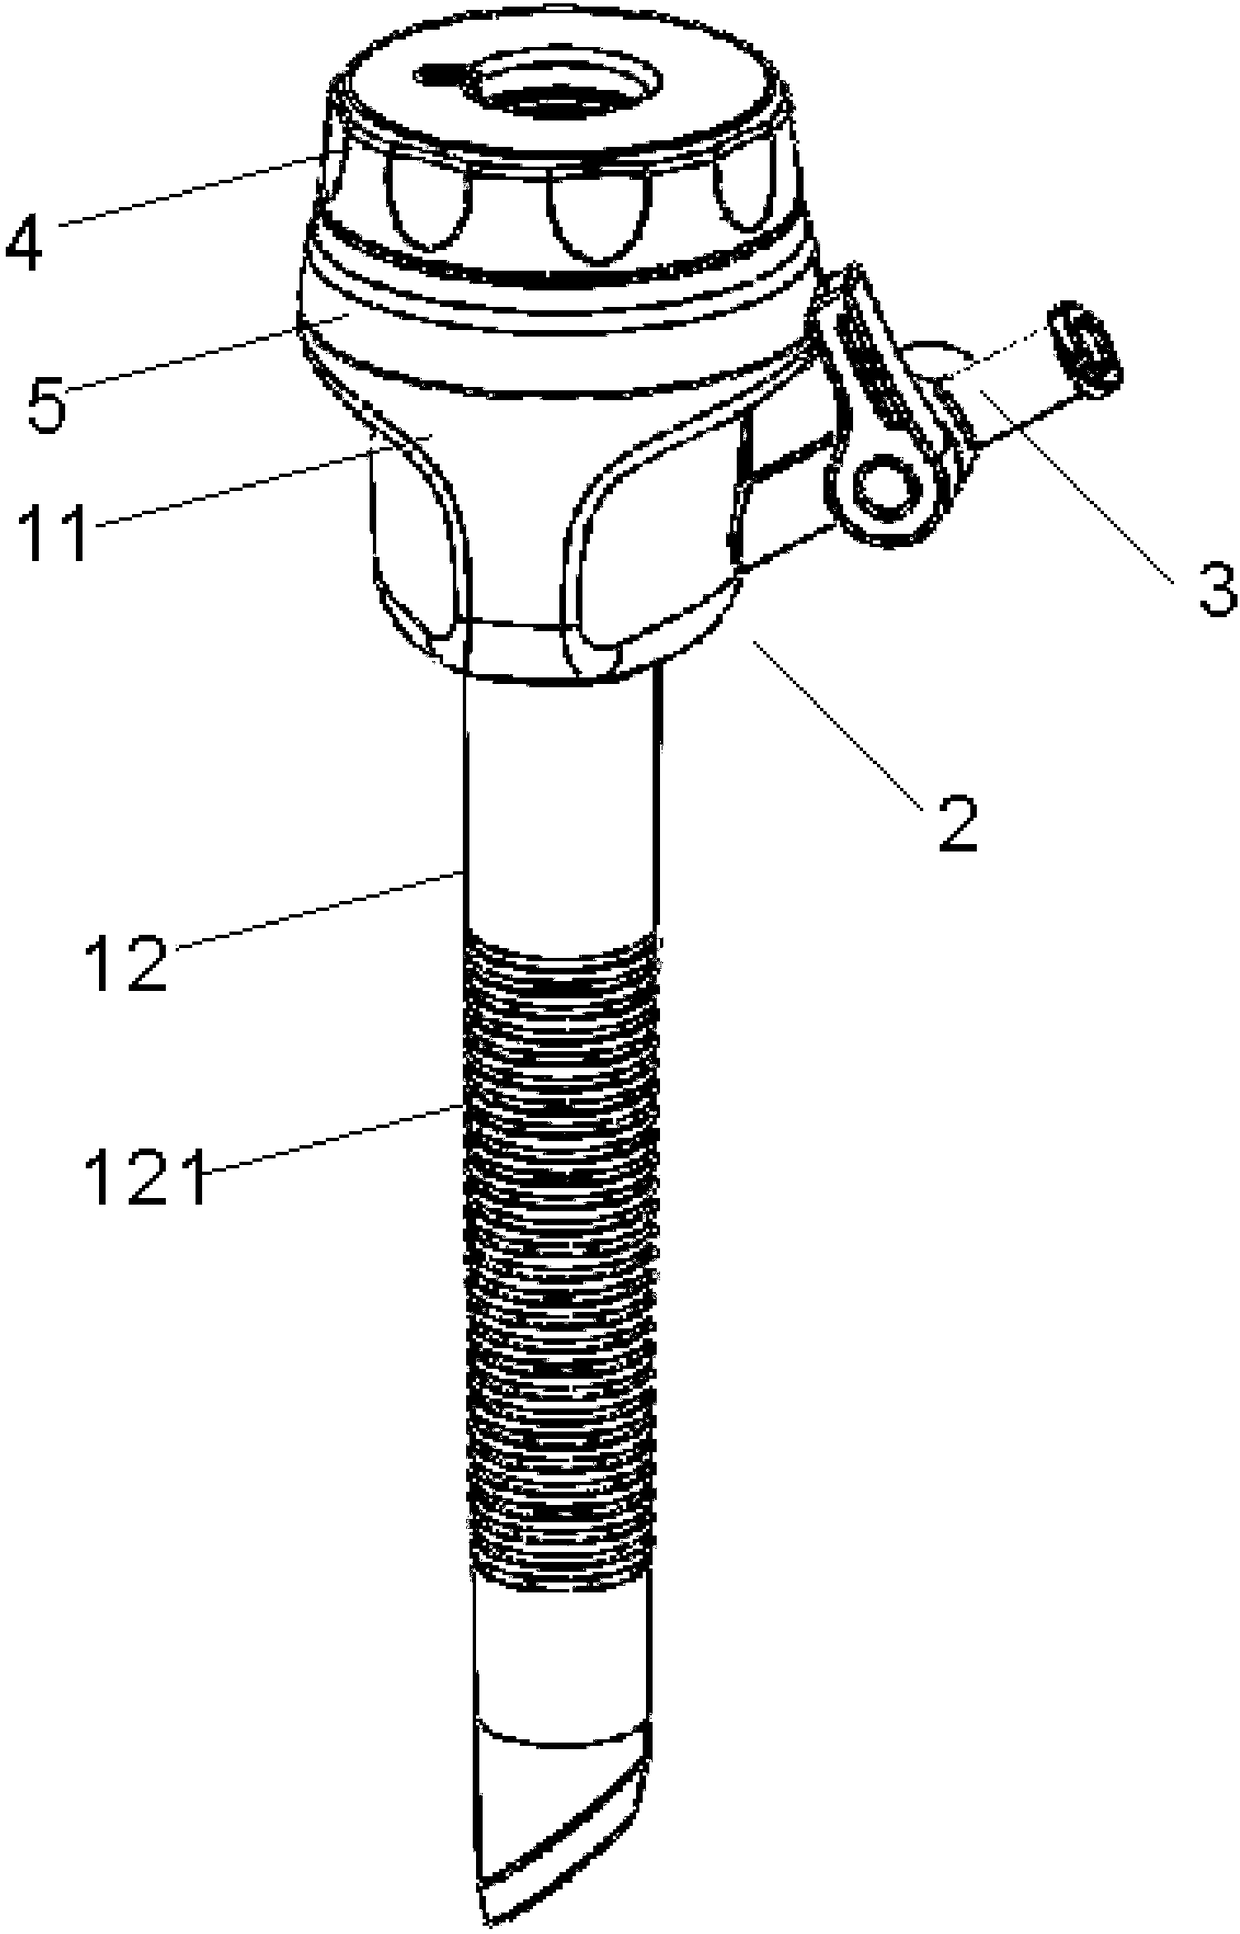 Puncture sleeve device for laparoscope puncture set